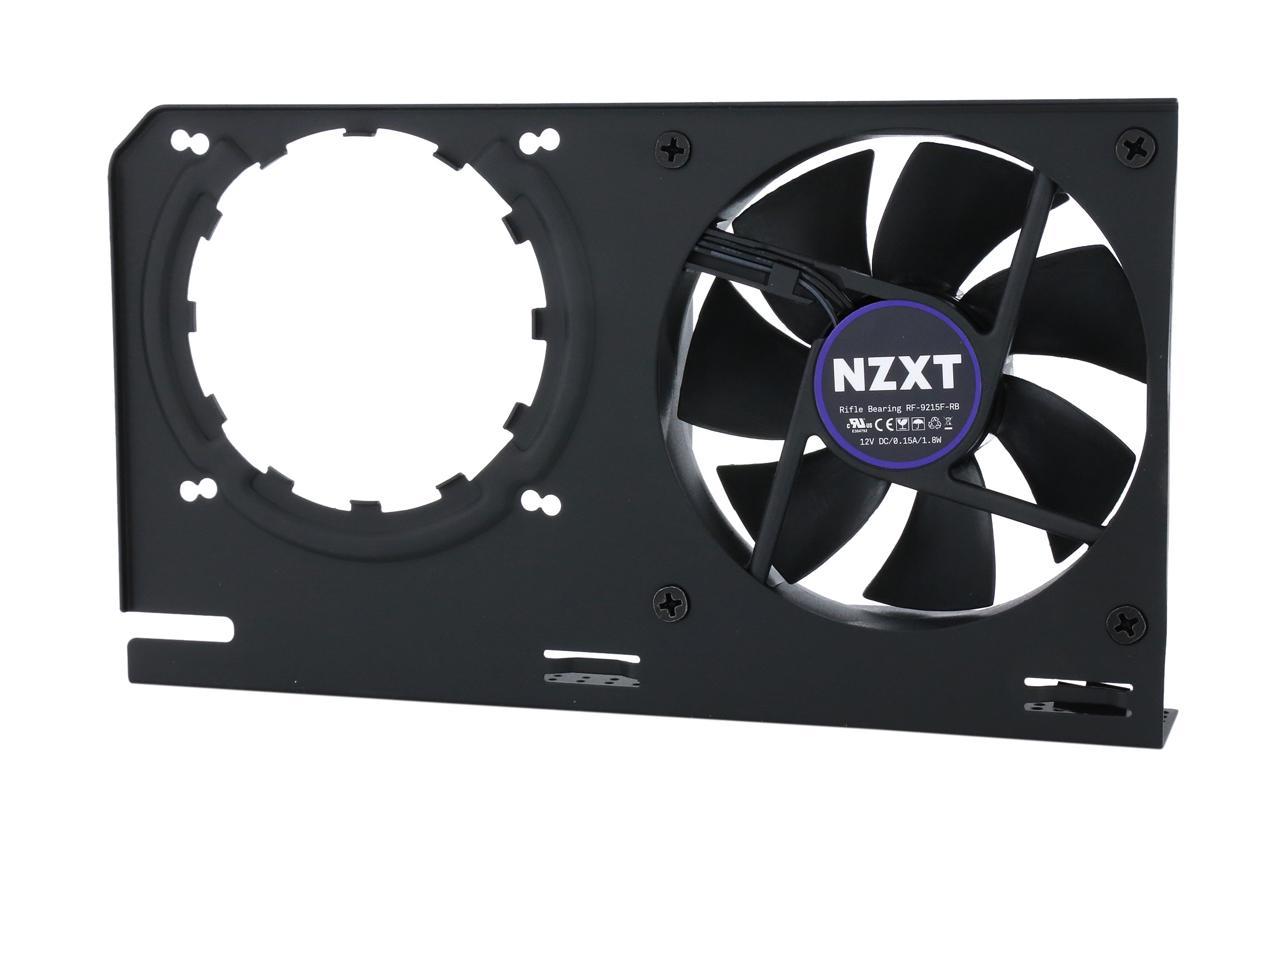 KRAKEN G12 - GPU Mounting Kit for Kraken X Series AIO - Enhanced GPU Cooling - AMD and NVIDIA GPU Compatibility - Active Cooling for VRM - Black - Newegg.com